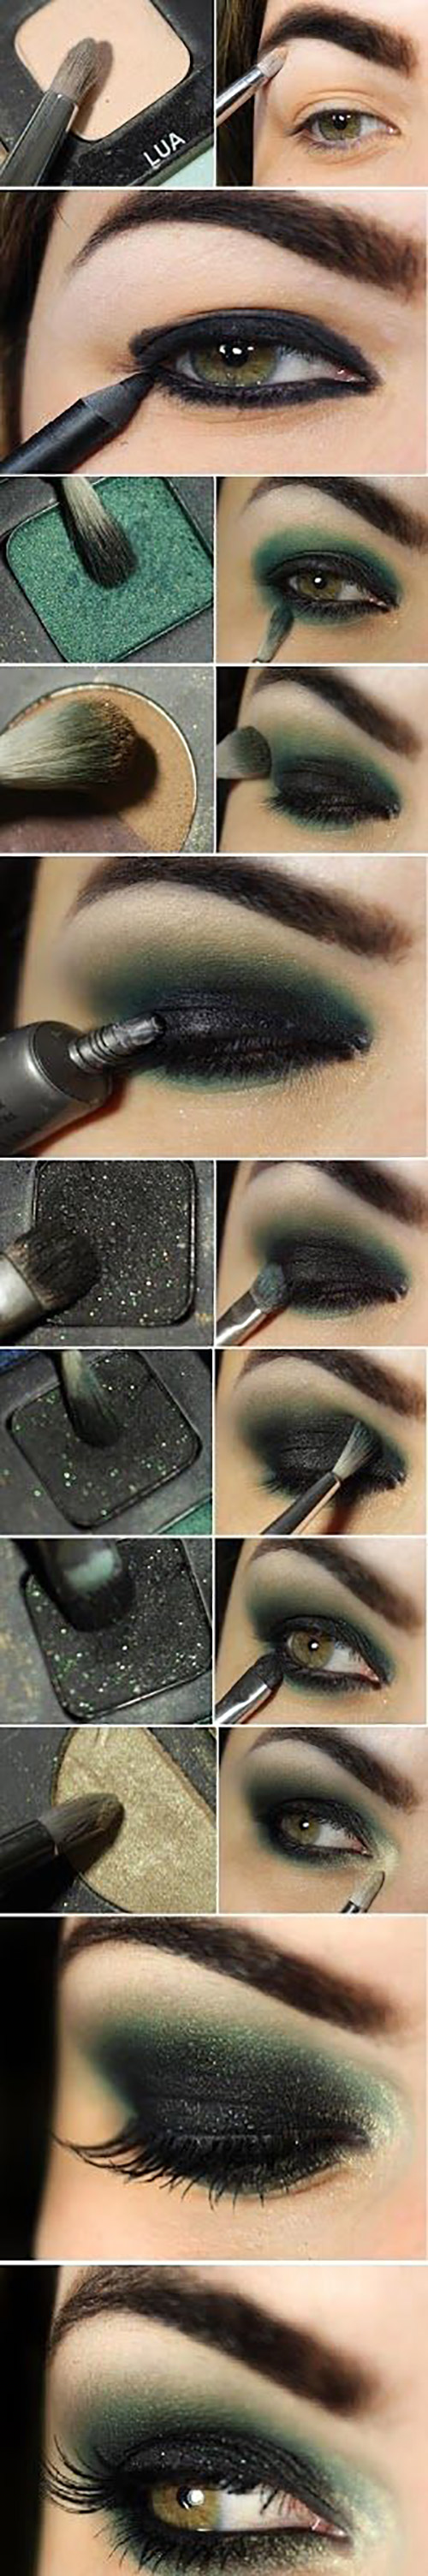 Green smokey eye makeup tutorial